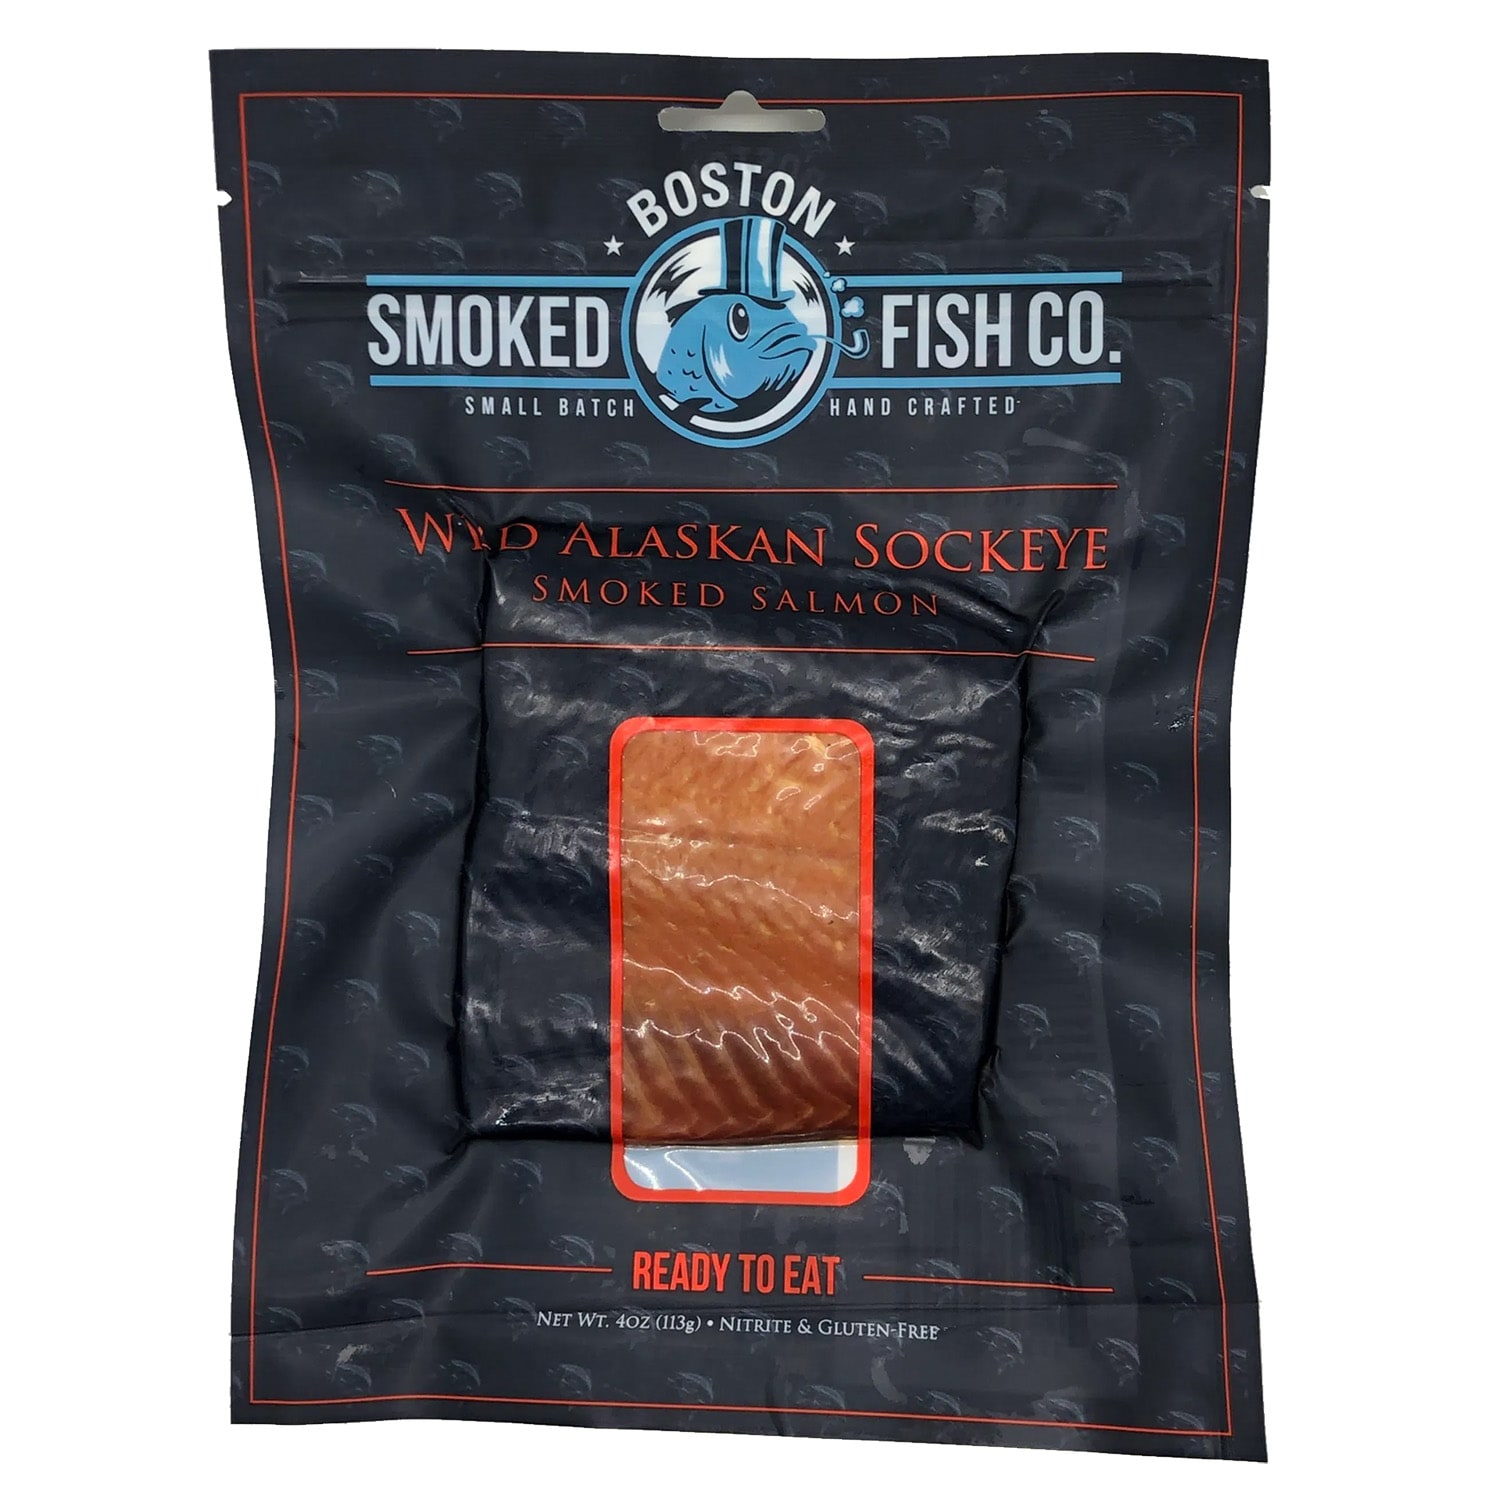 Boston Smoked Fish Co Wild Alaskan Sockeye